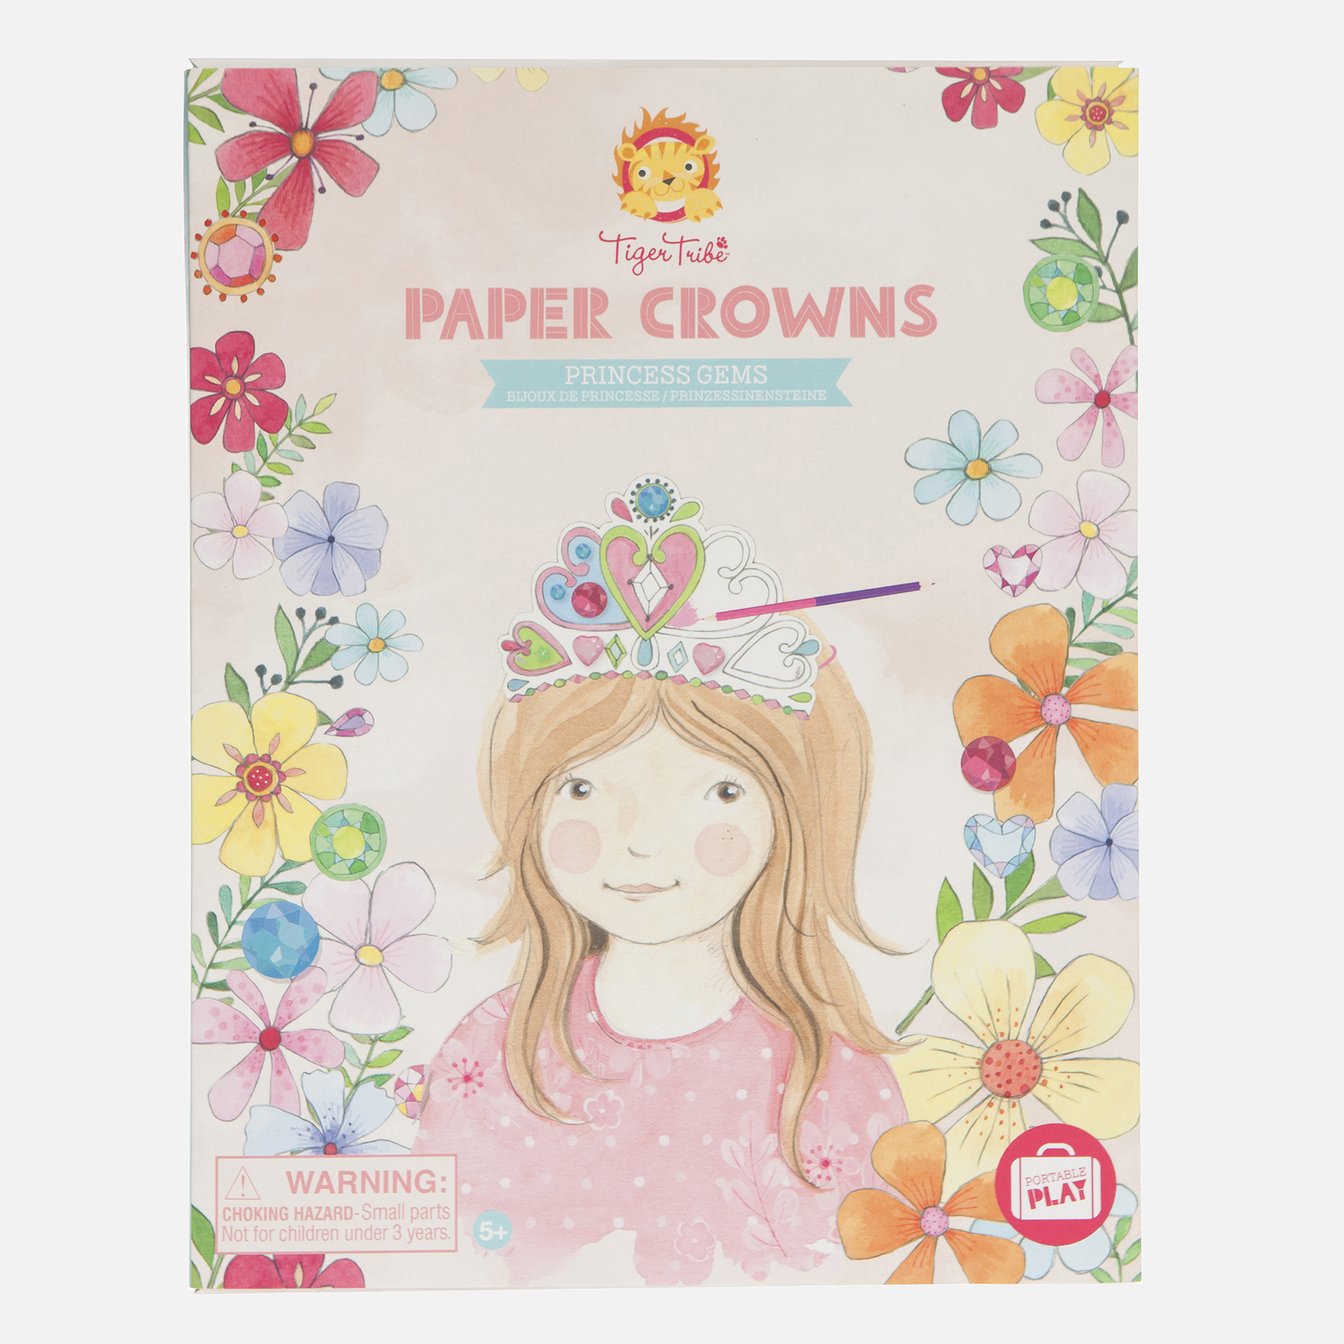 Tiger Tribe | Paper Crowns - Princess Gems